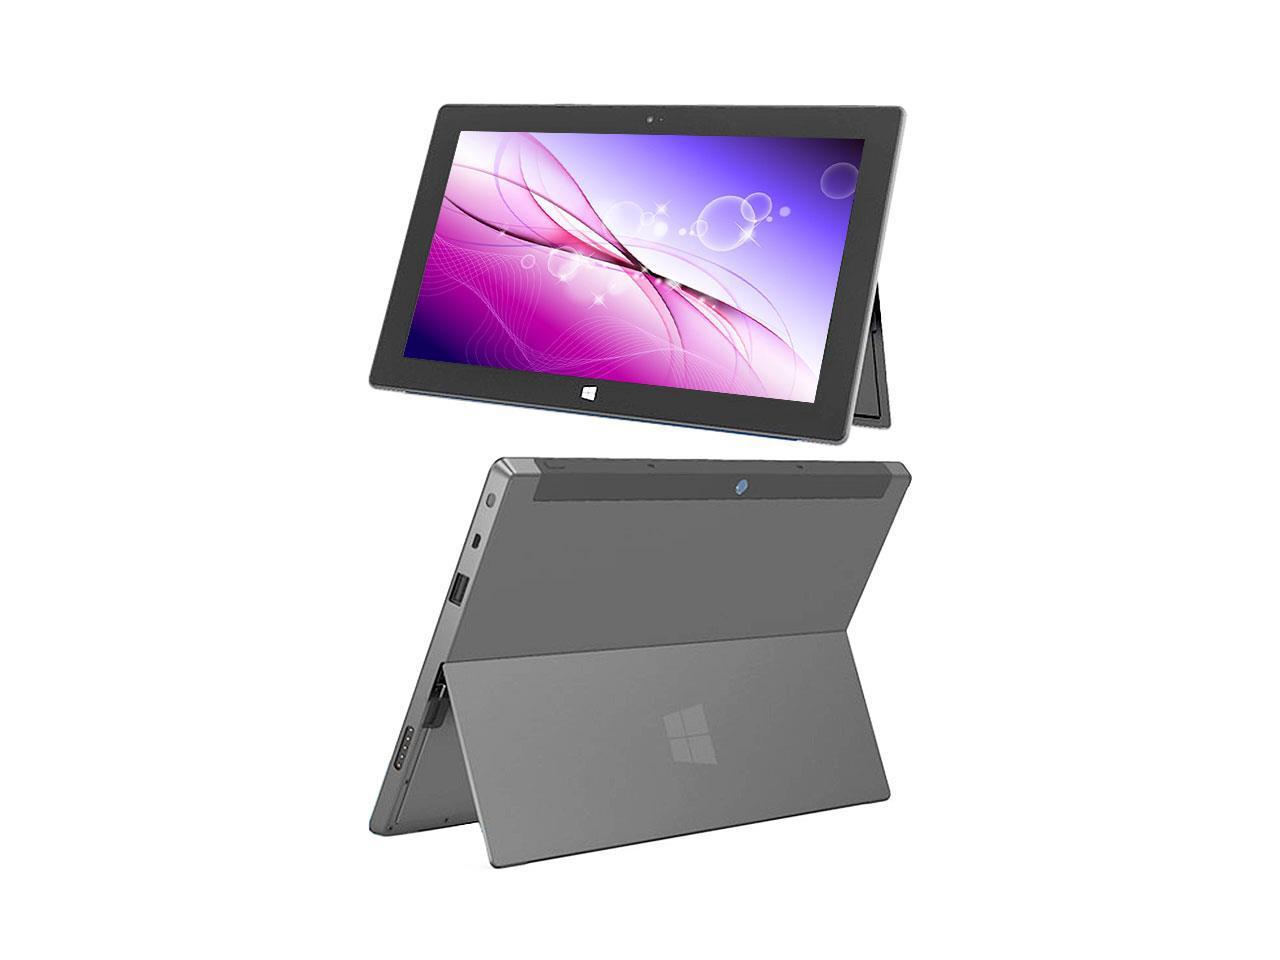 Microsoft Surface Pro 3 1700 MHz Intel(R) Core(TM) i7-4650U CPU